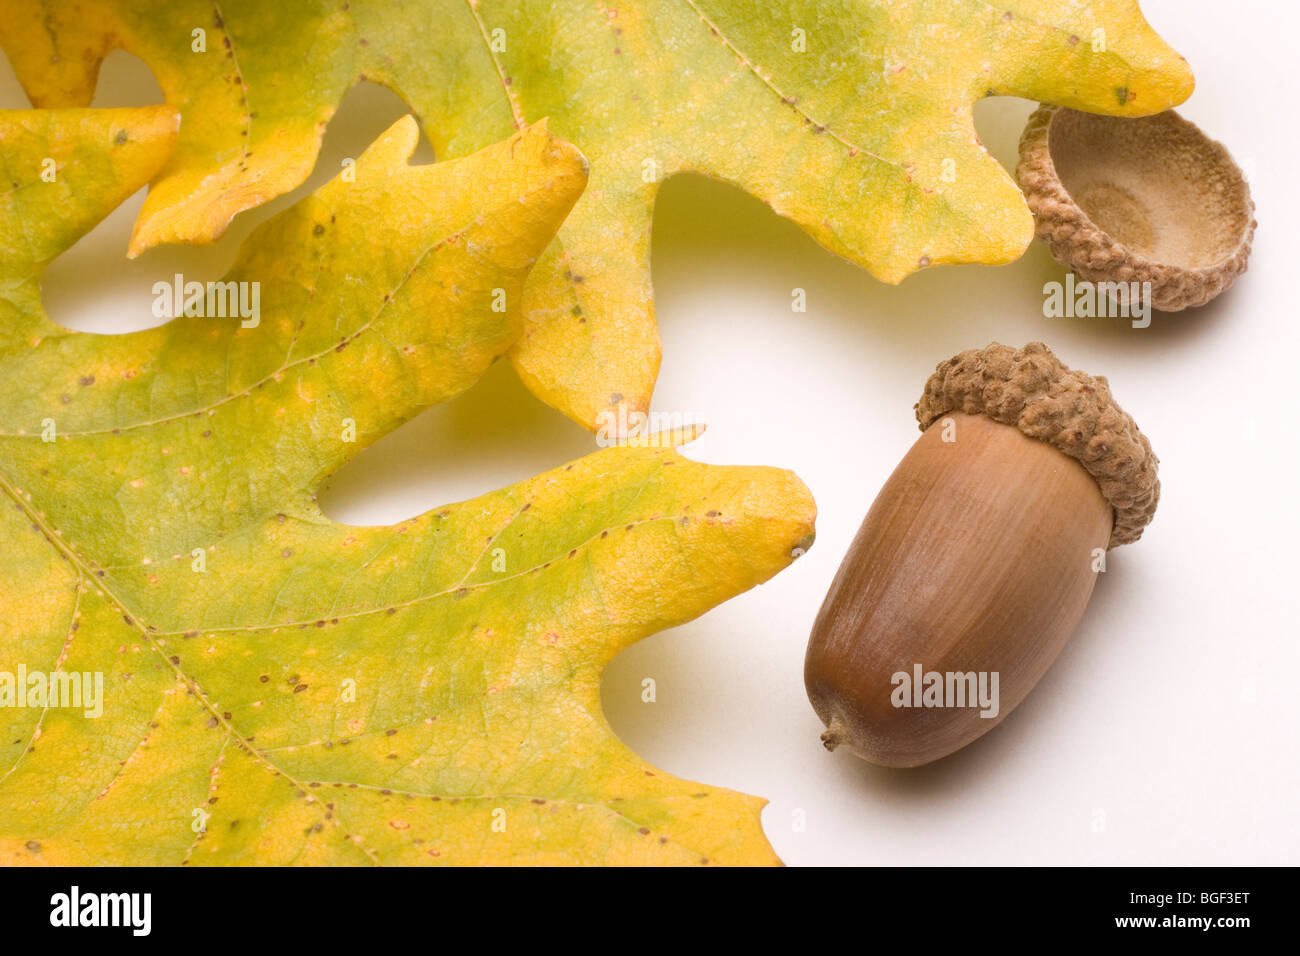 Symbols of autumn oak leaves and acorns isolated on a plain white background Stock Photo